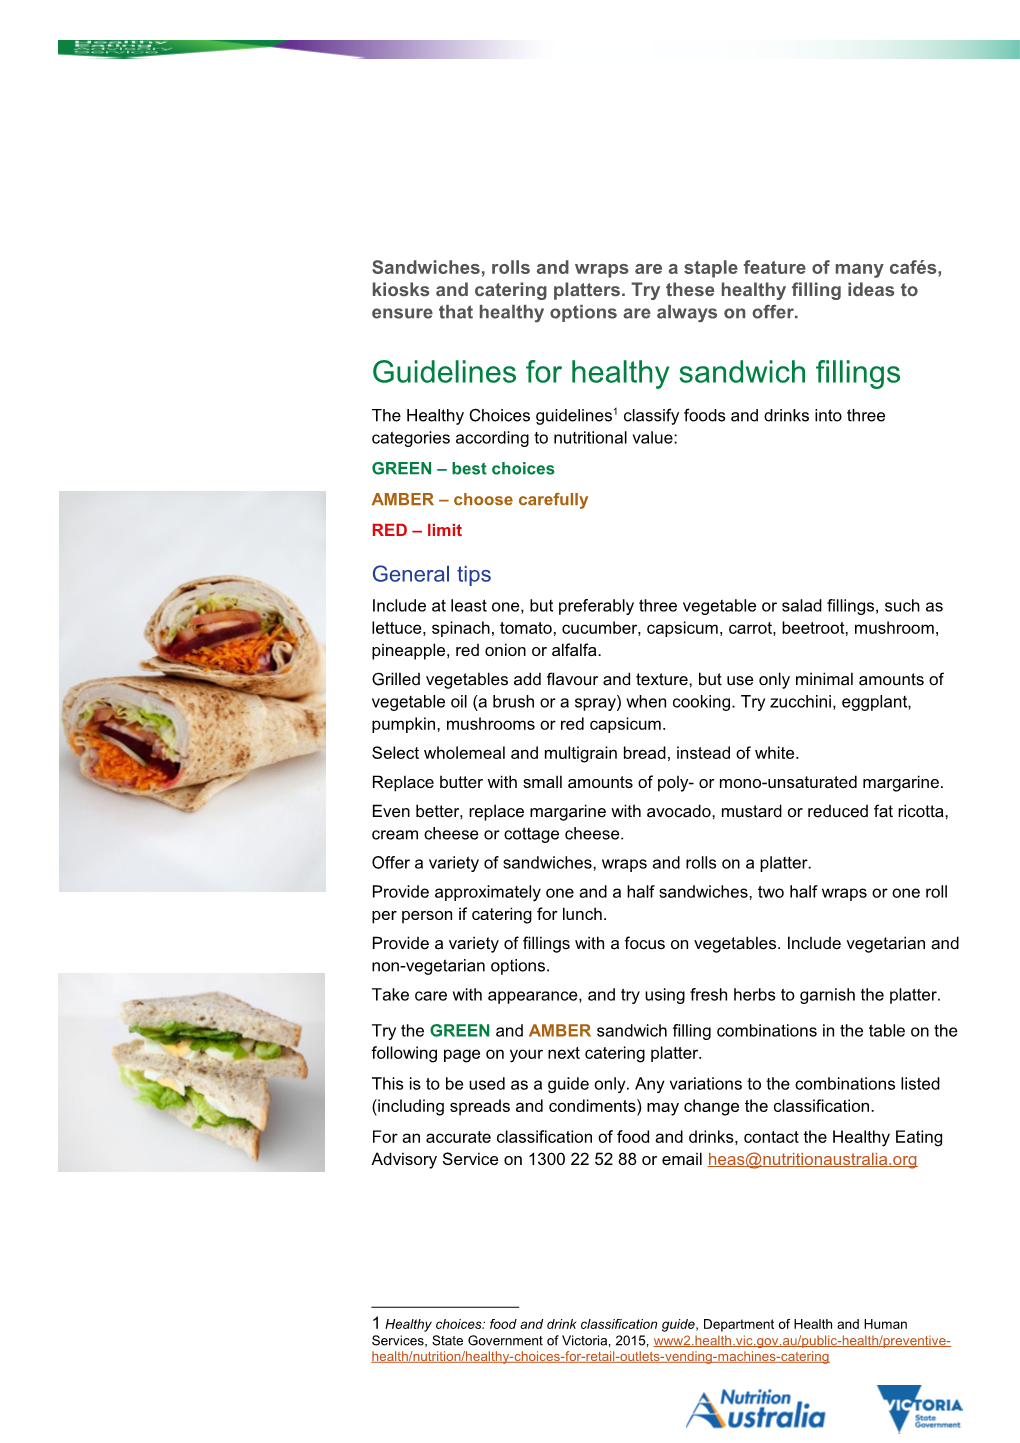 Guidelines for Healthy Sandwich Fillings